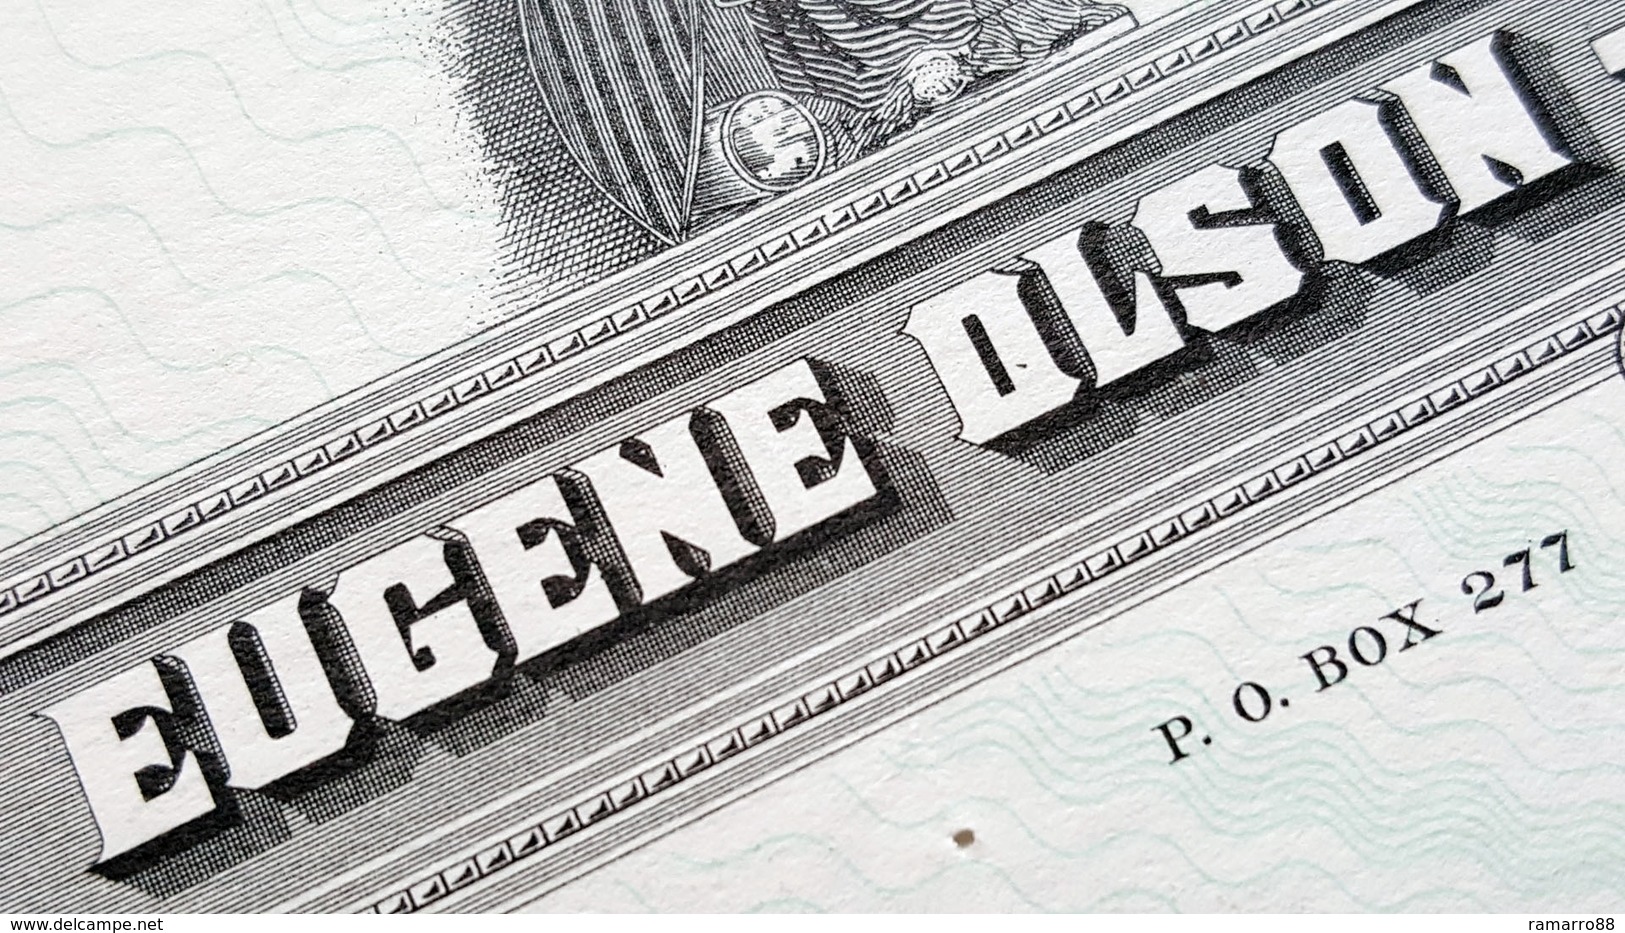 USA - Eugene Olson Banknote Engraver - Rare Bond-like Specimen Promotional Note 1962 VF+